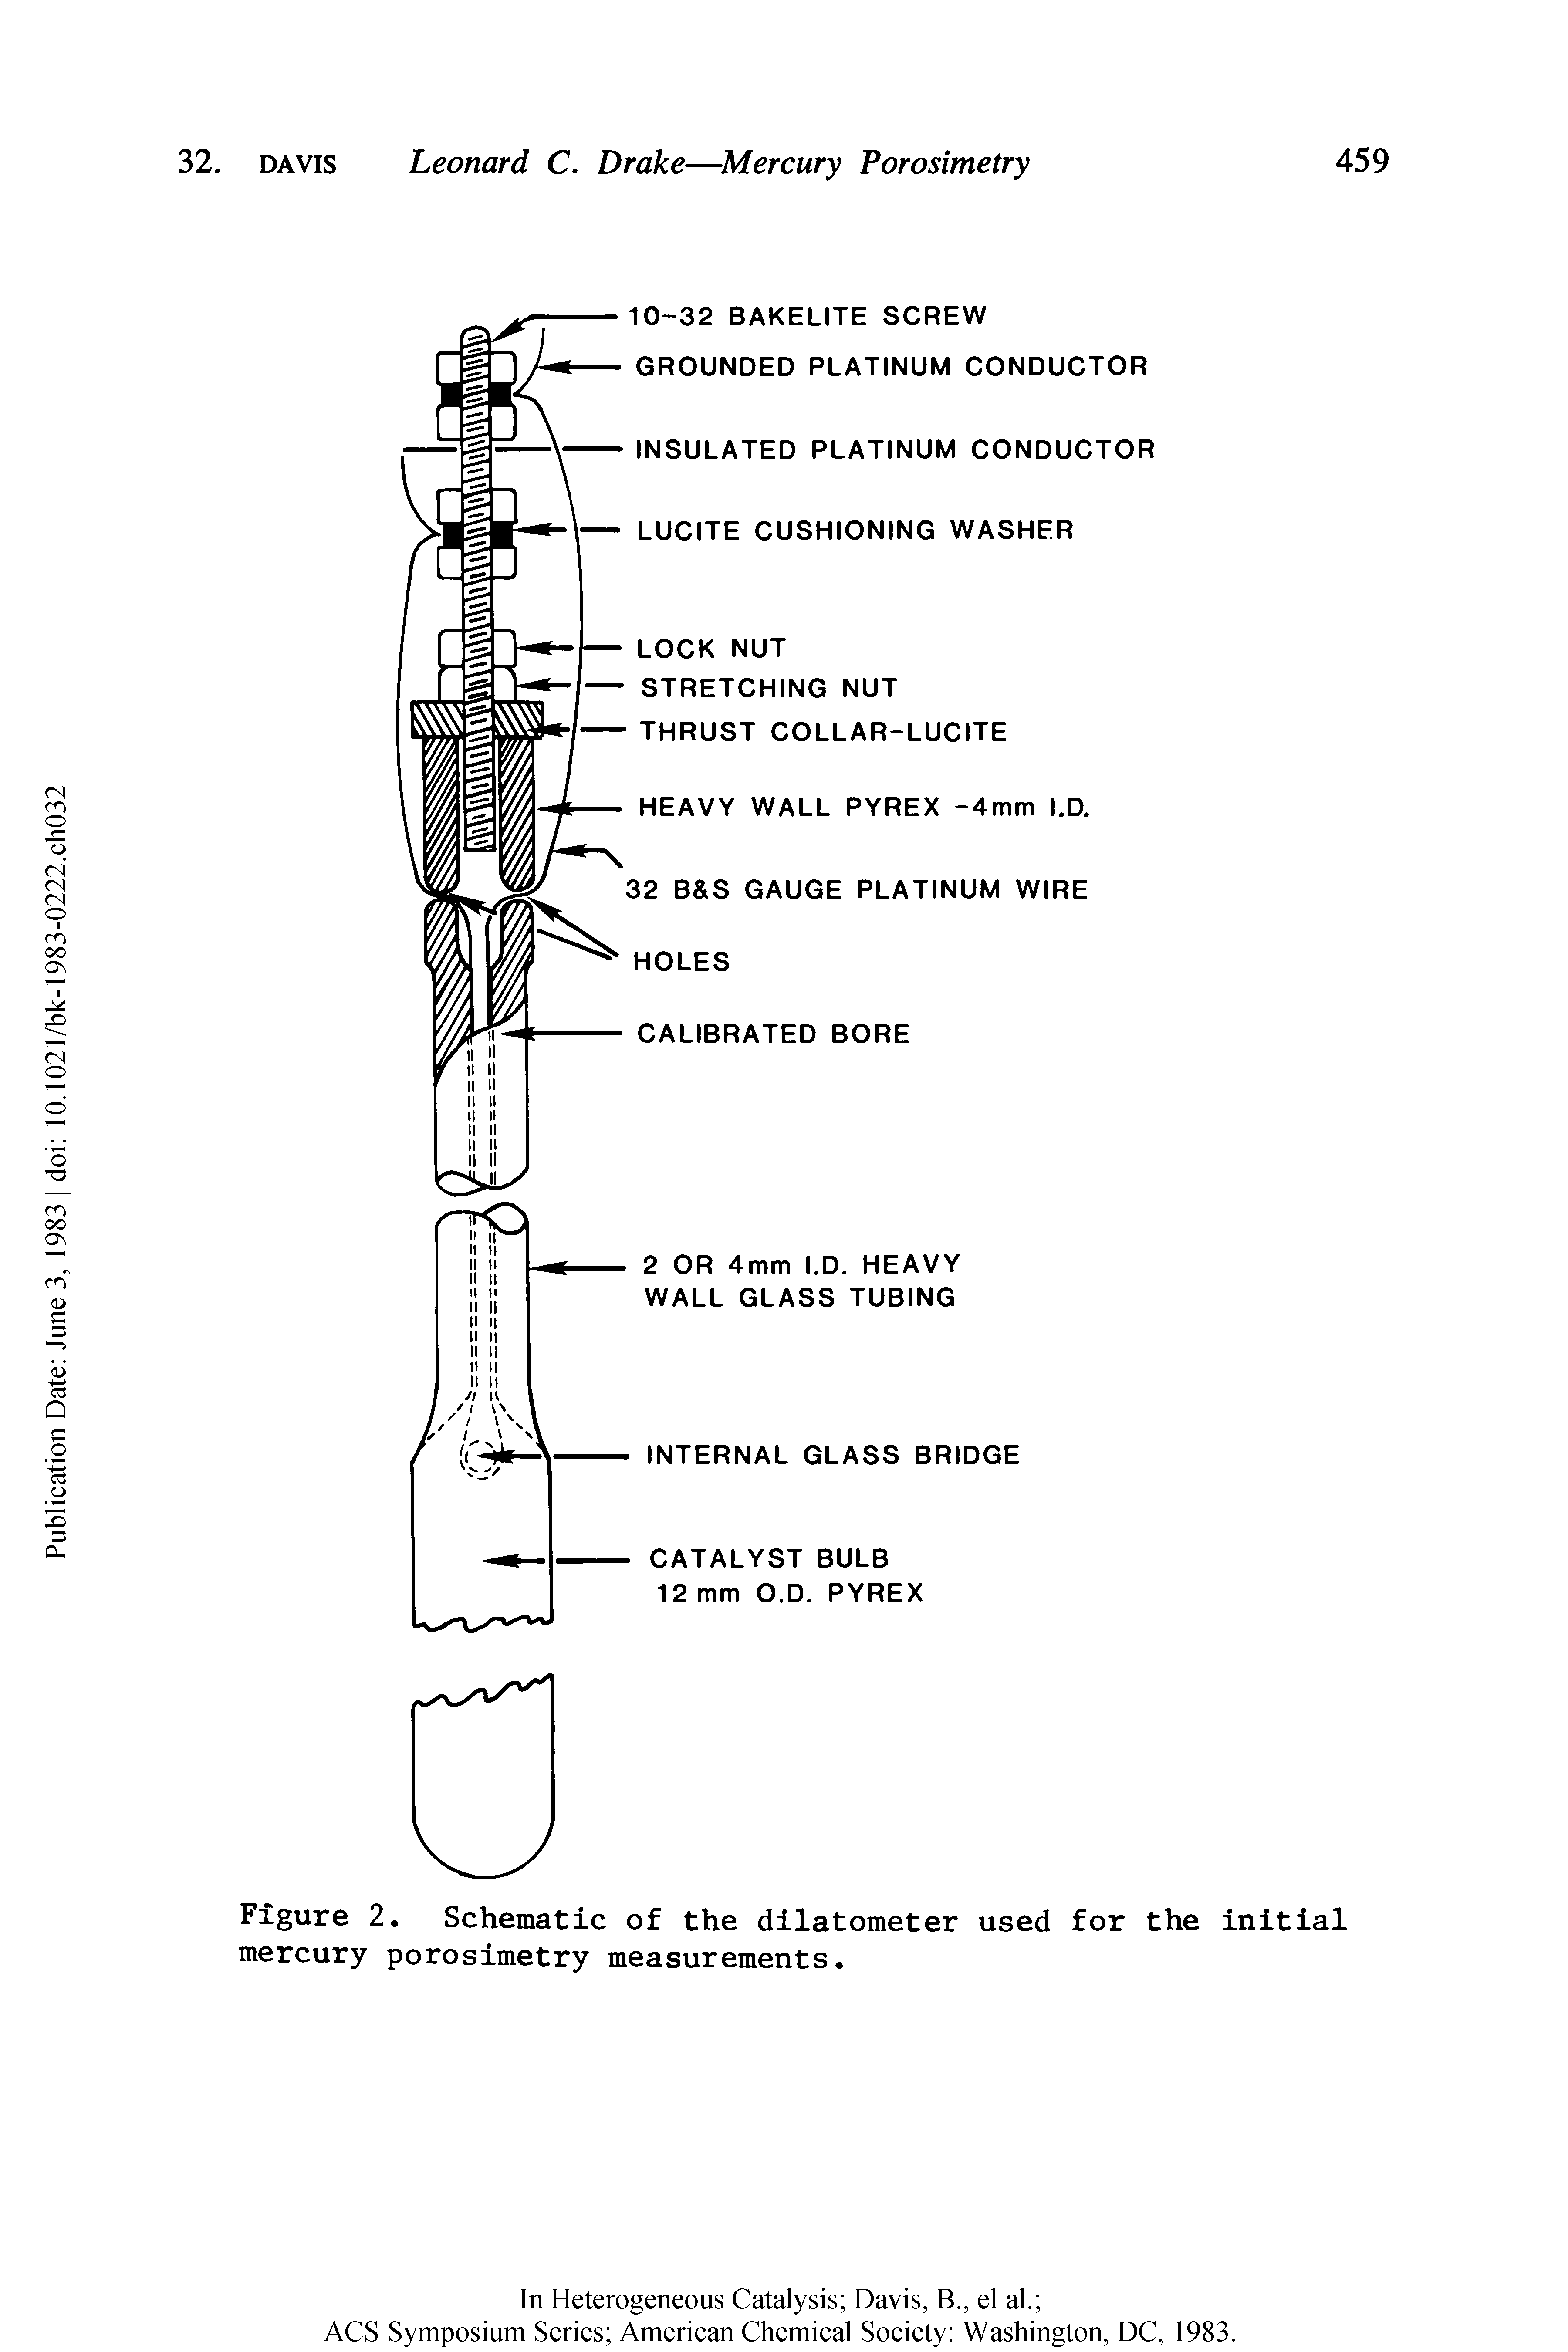 Figure 2, Schematic of the dilatometer used for the initial mercury porosimetry measurements.